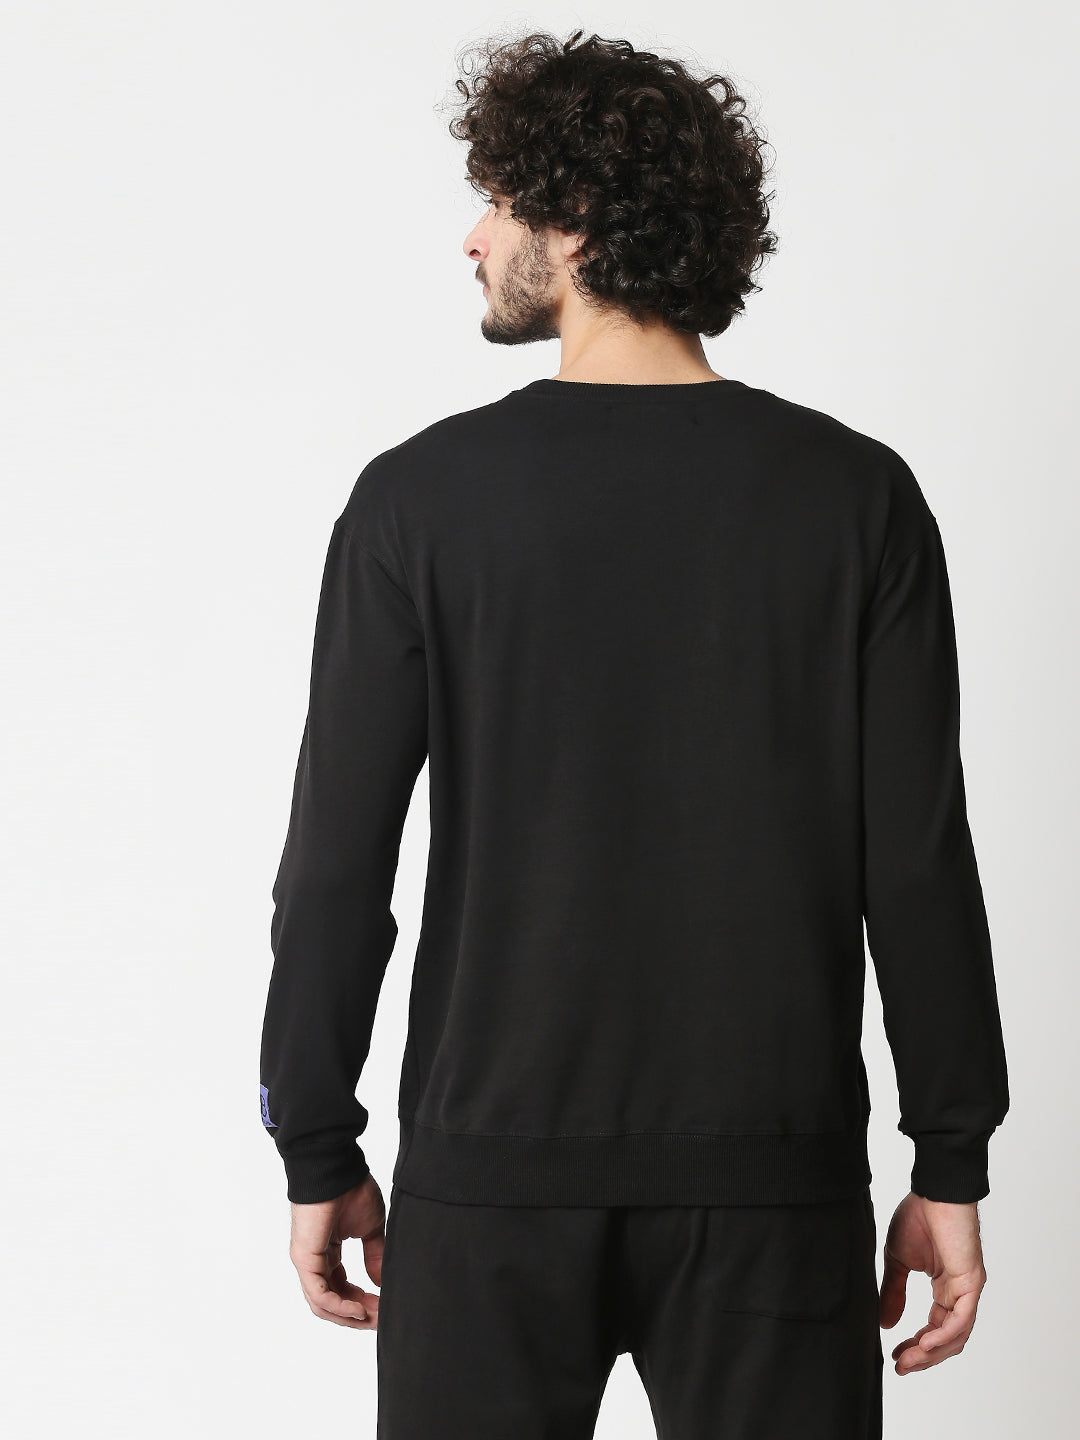 Buy Men's Full sleeves Black Sweat T- Shirt